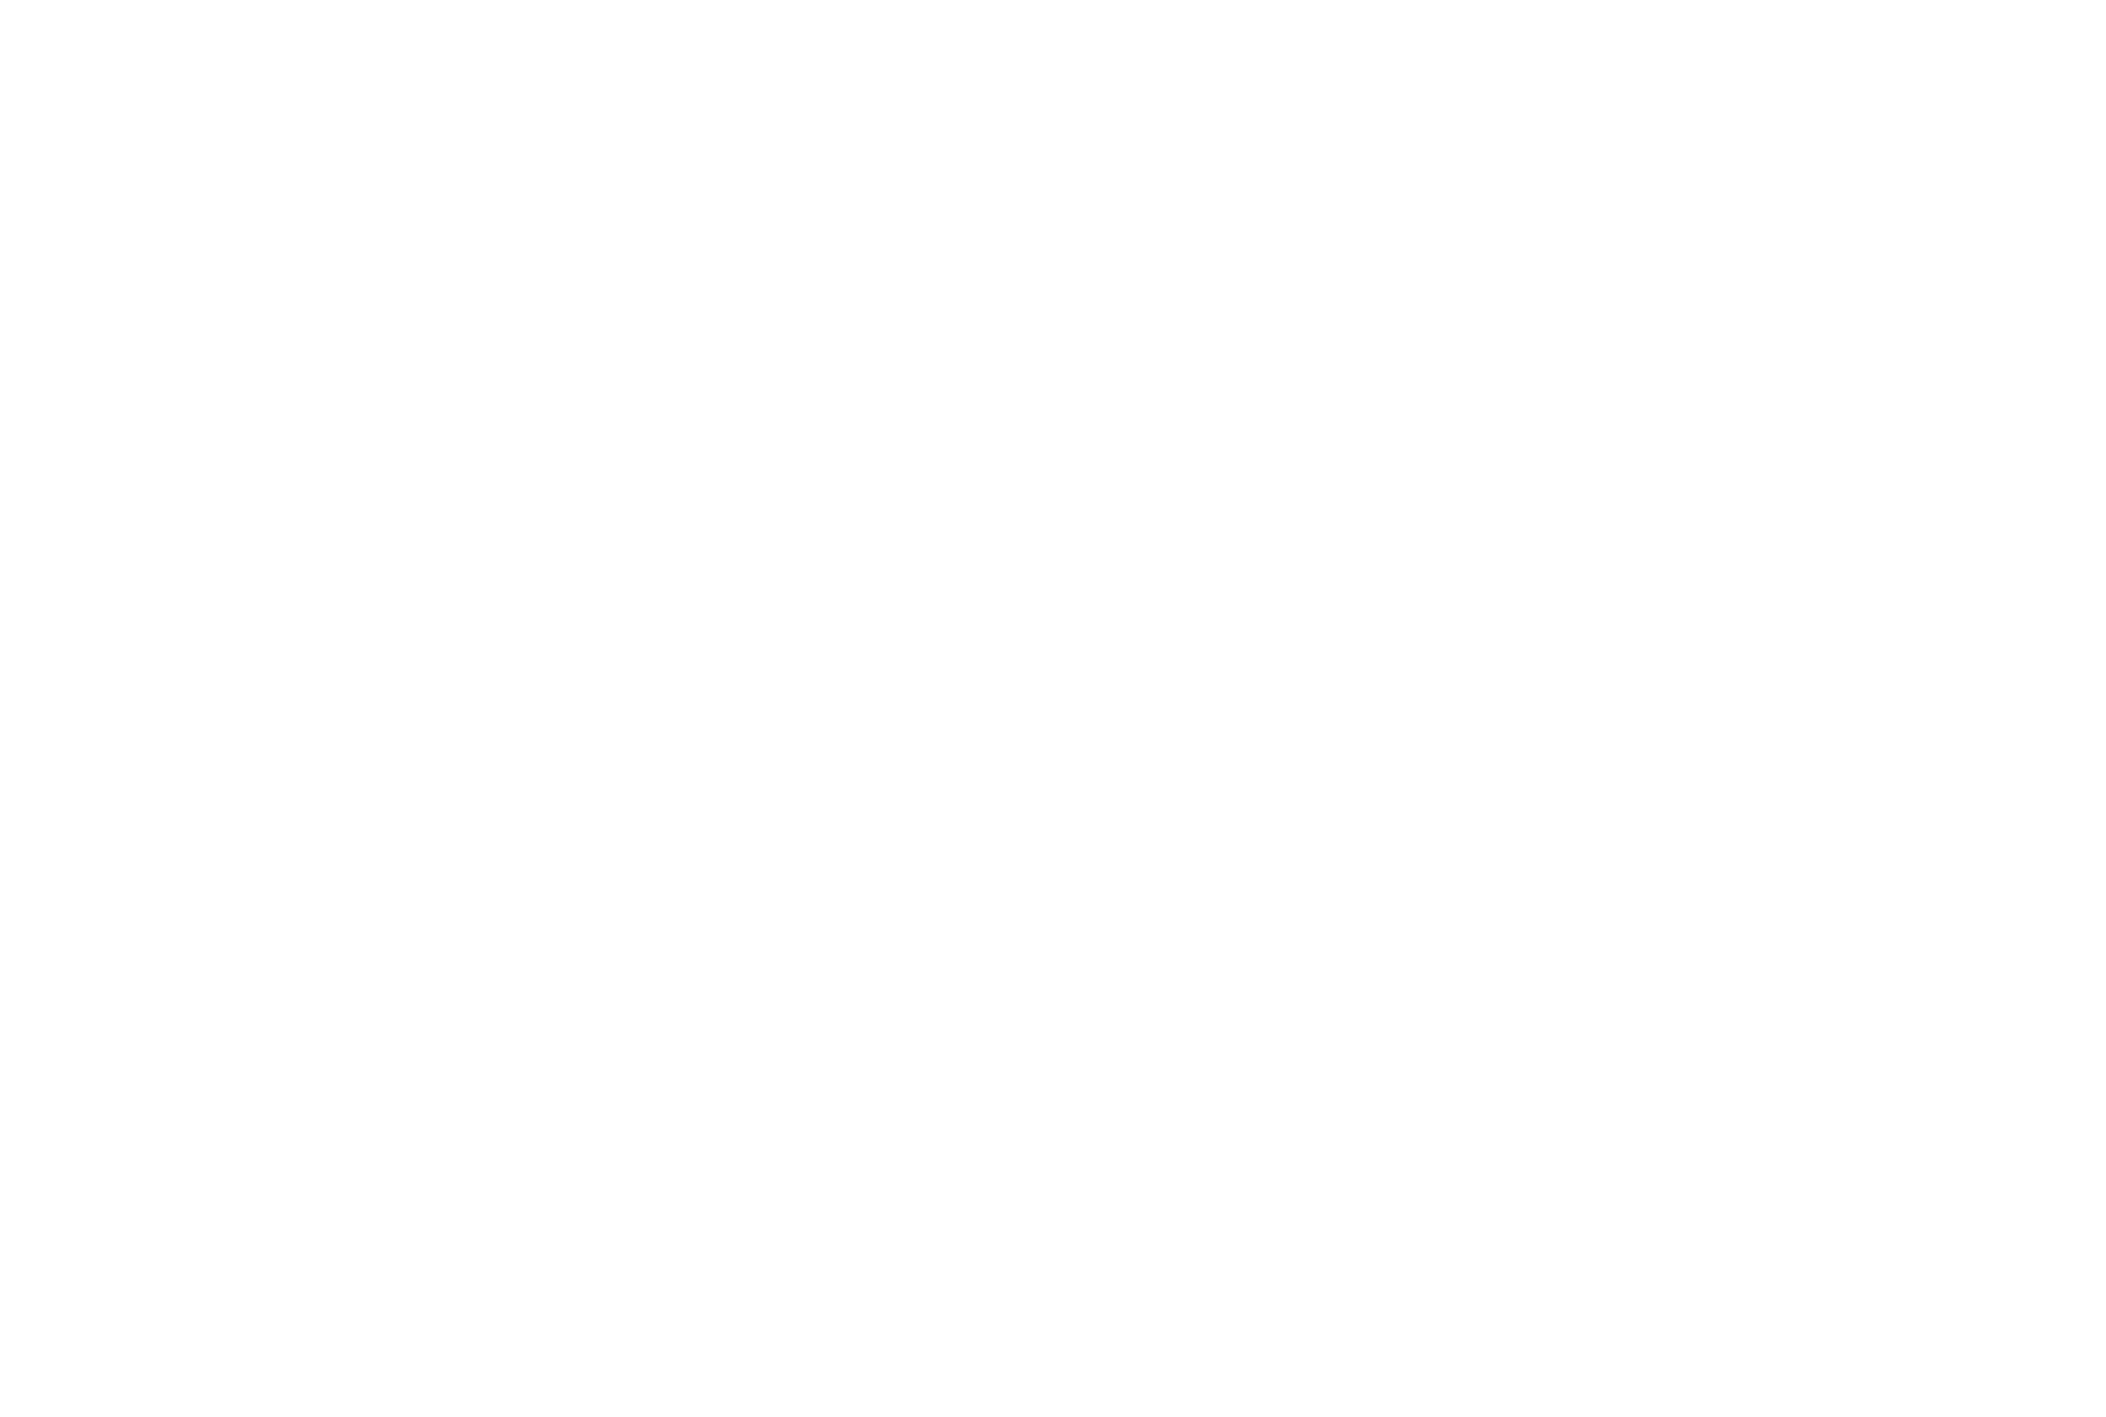 le prtit maghreb logo png-4